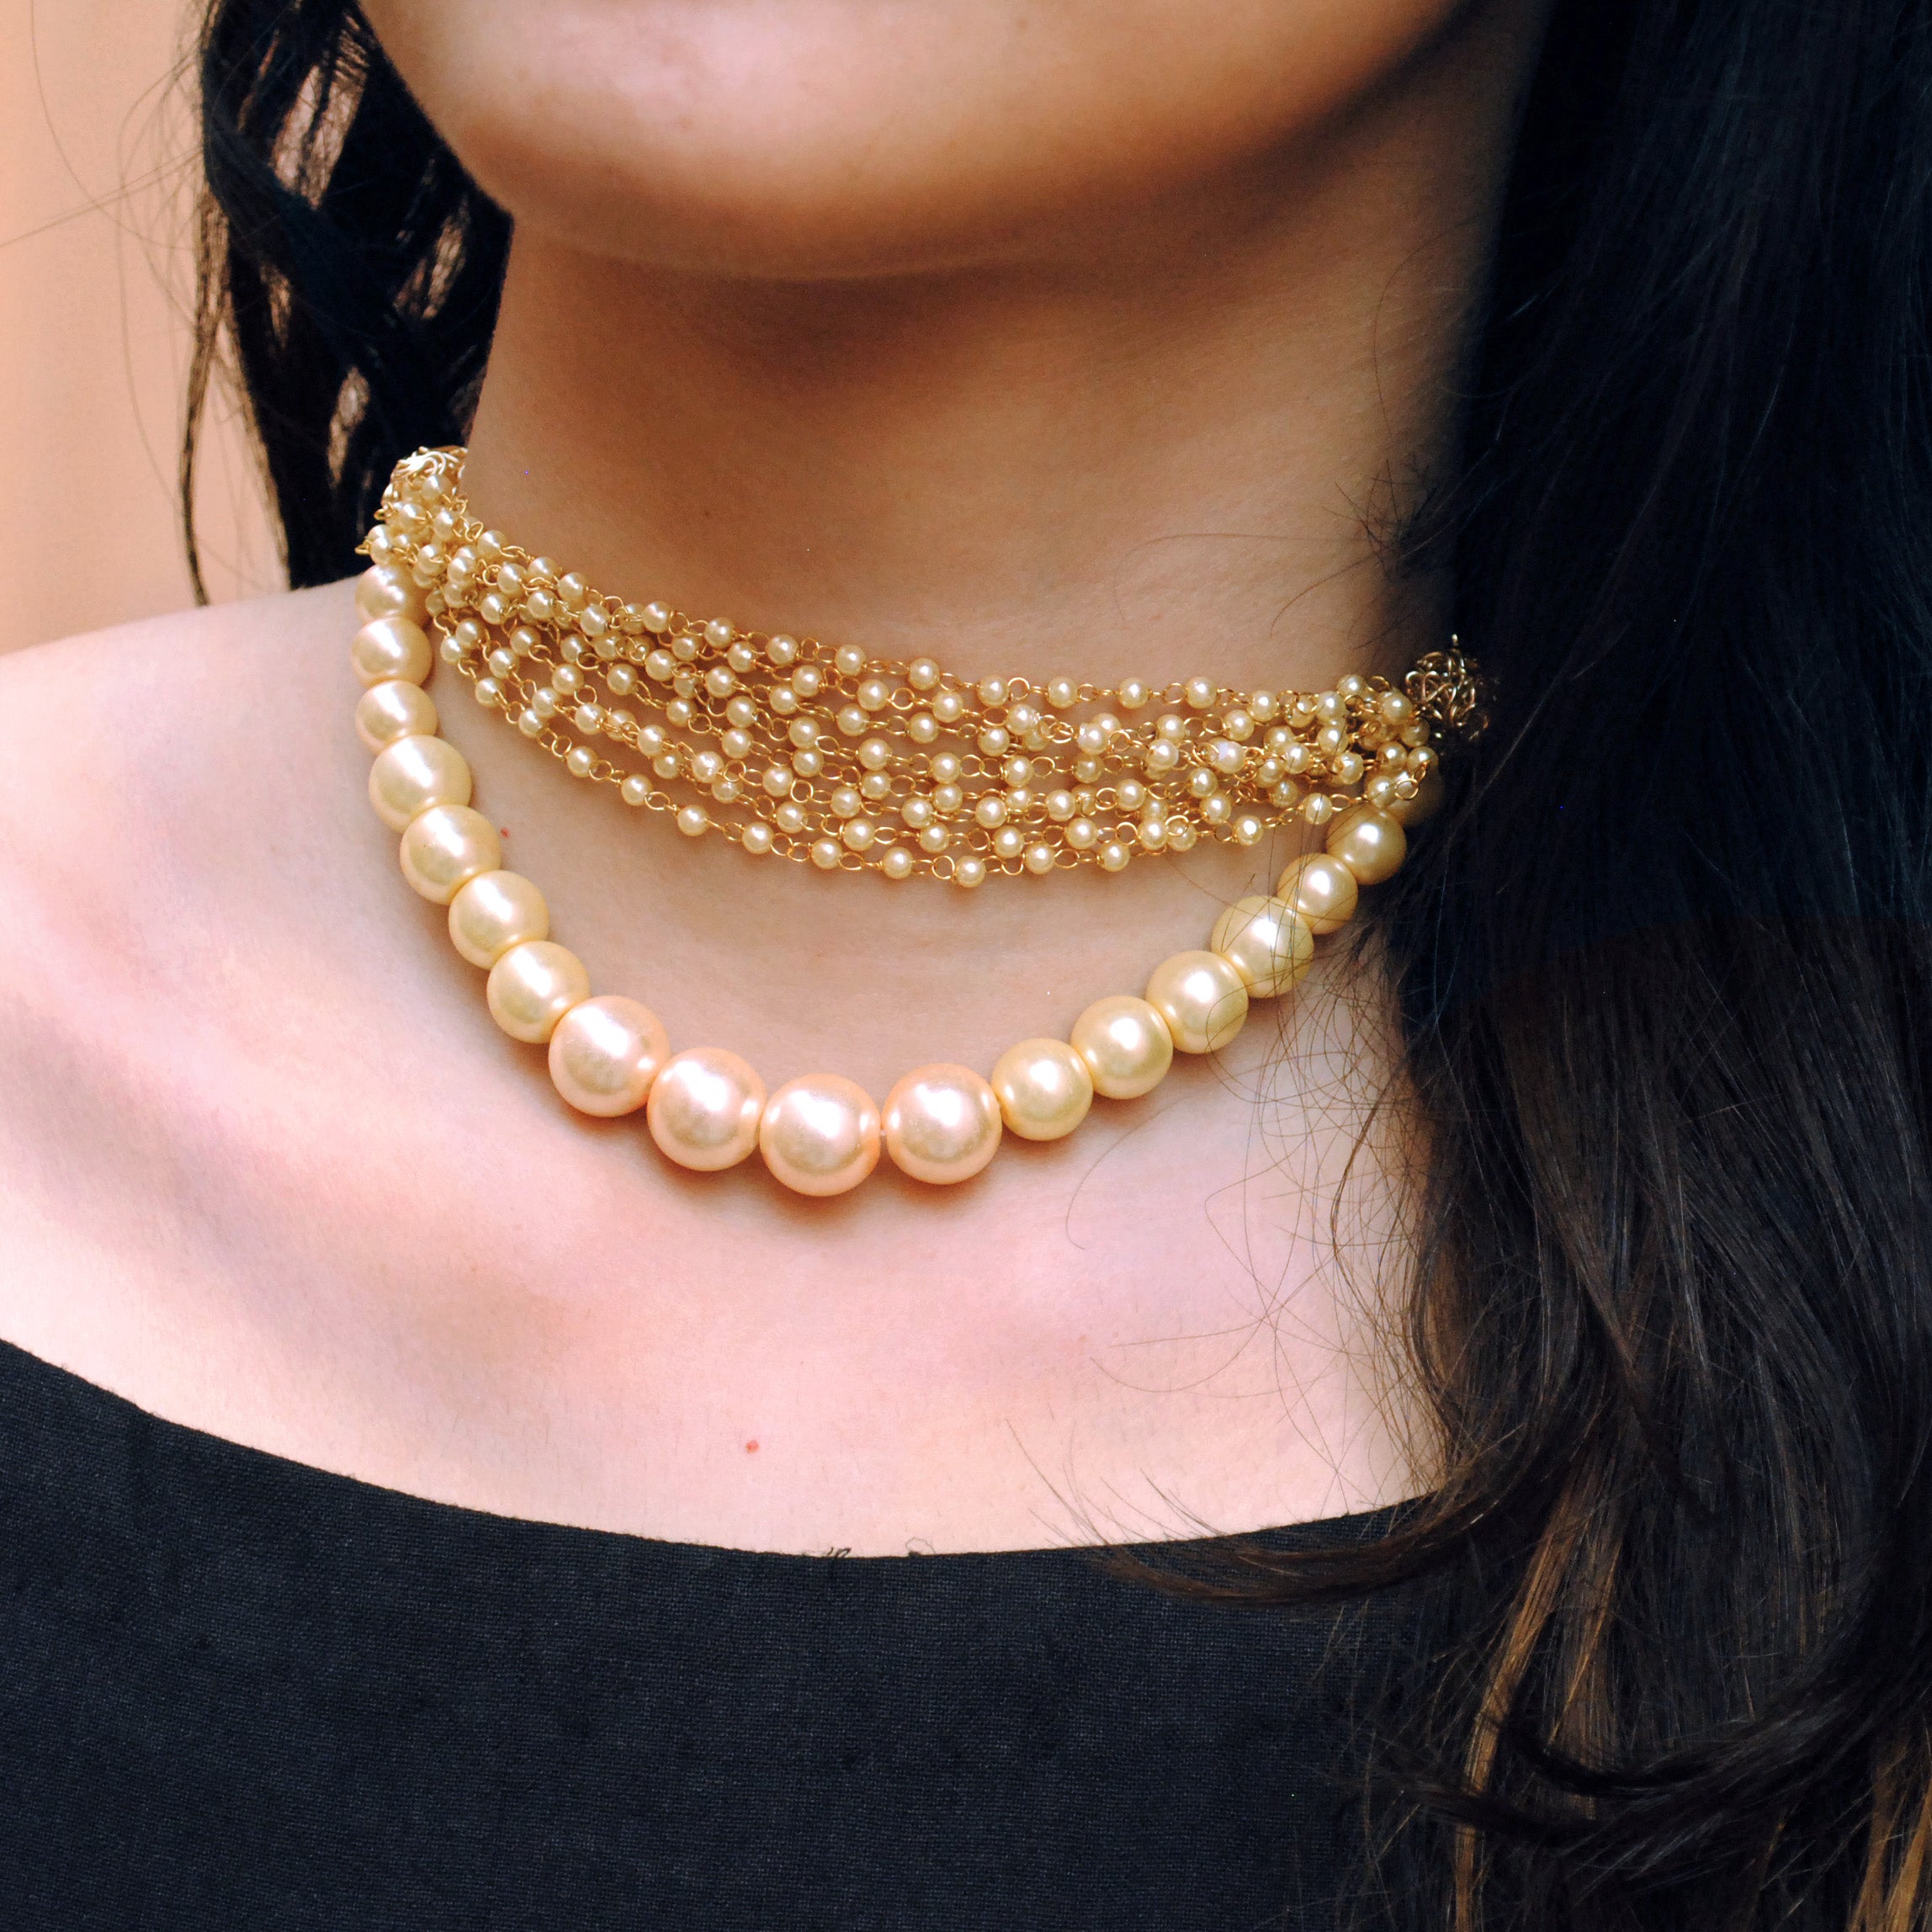  golden pearls choker necklace.